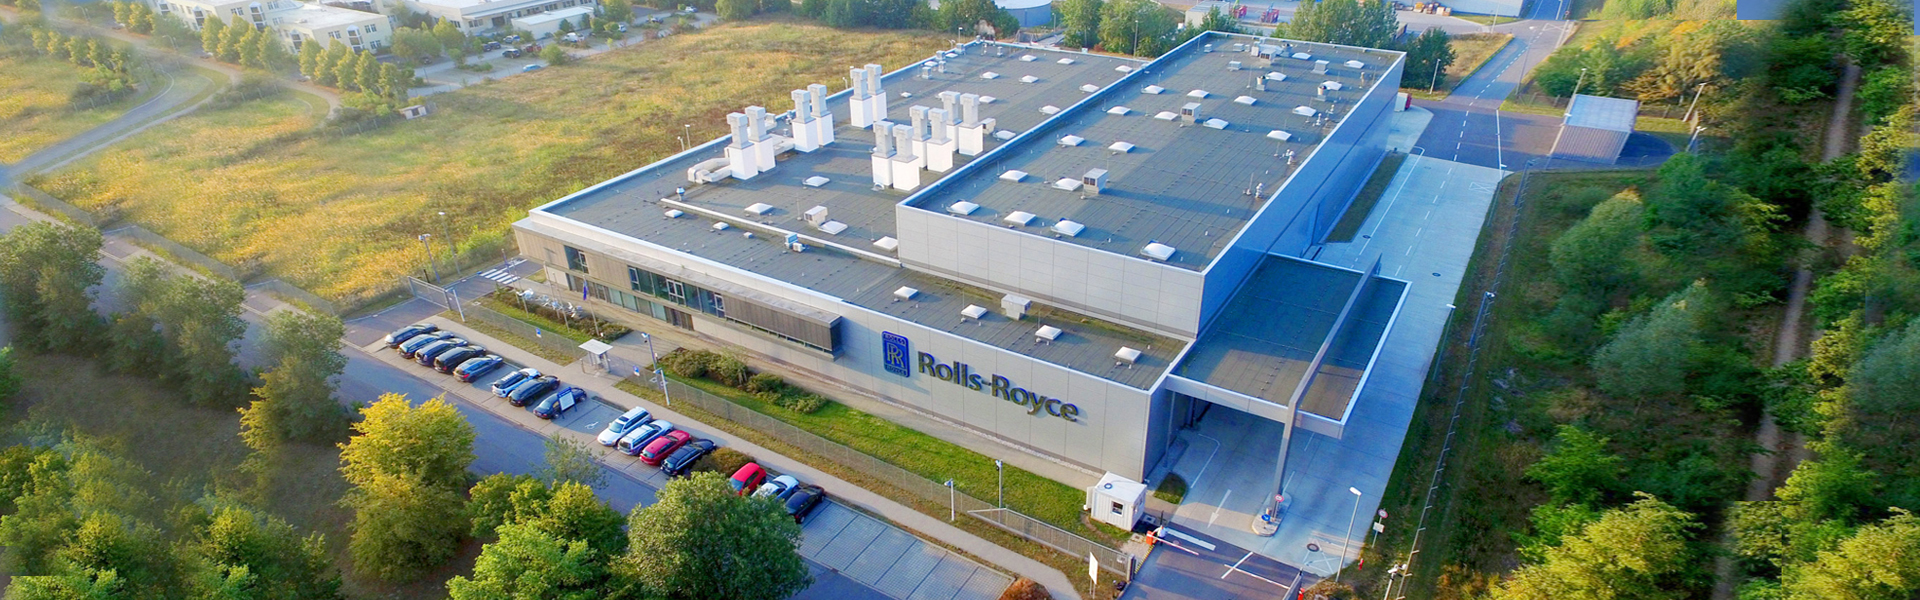 Rolls-Royce MTOC Mechanical Test Operations Centre